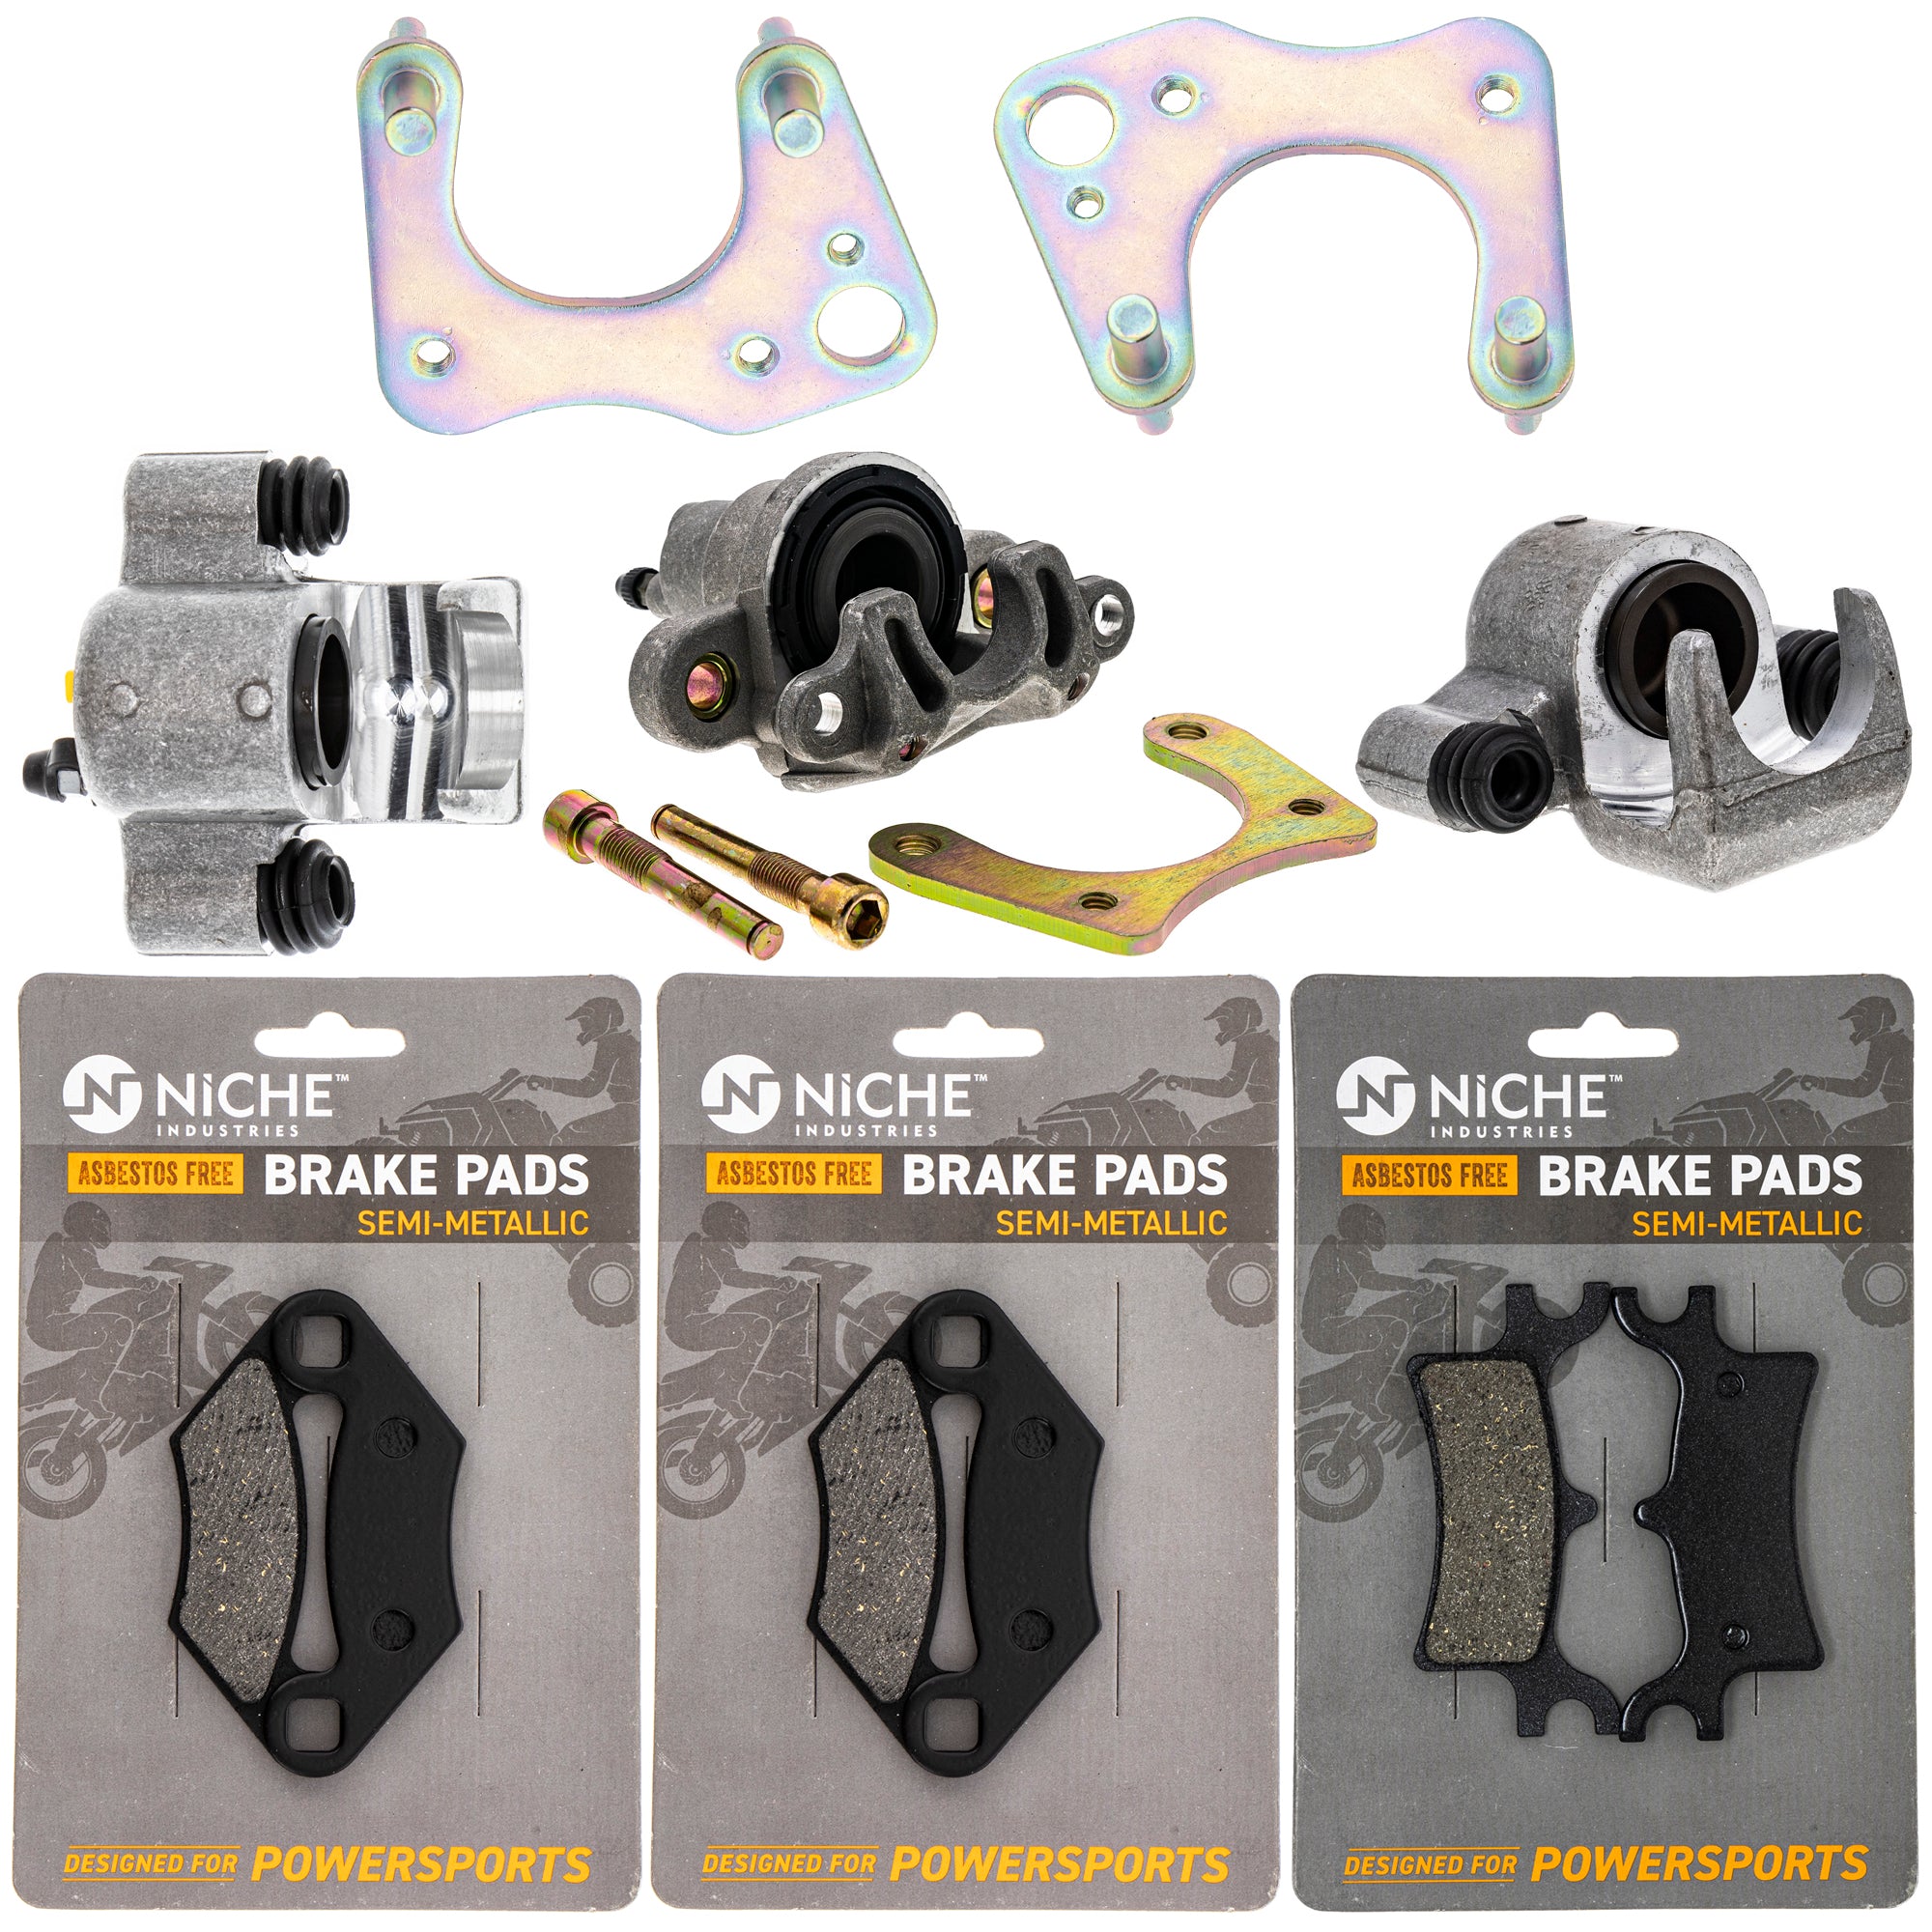 Brake Rebuild Kit Calipers & Pads (3) for zOTHER Polaris GEM Trail Sportsman Scrambler NICHE MK1008213